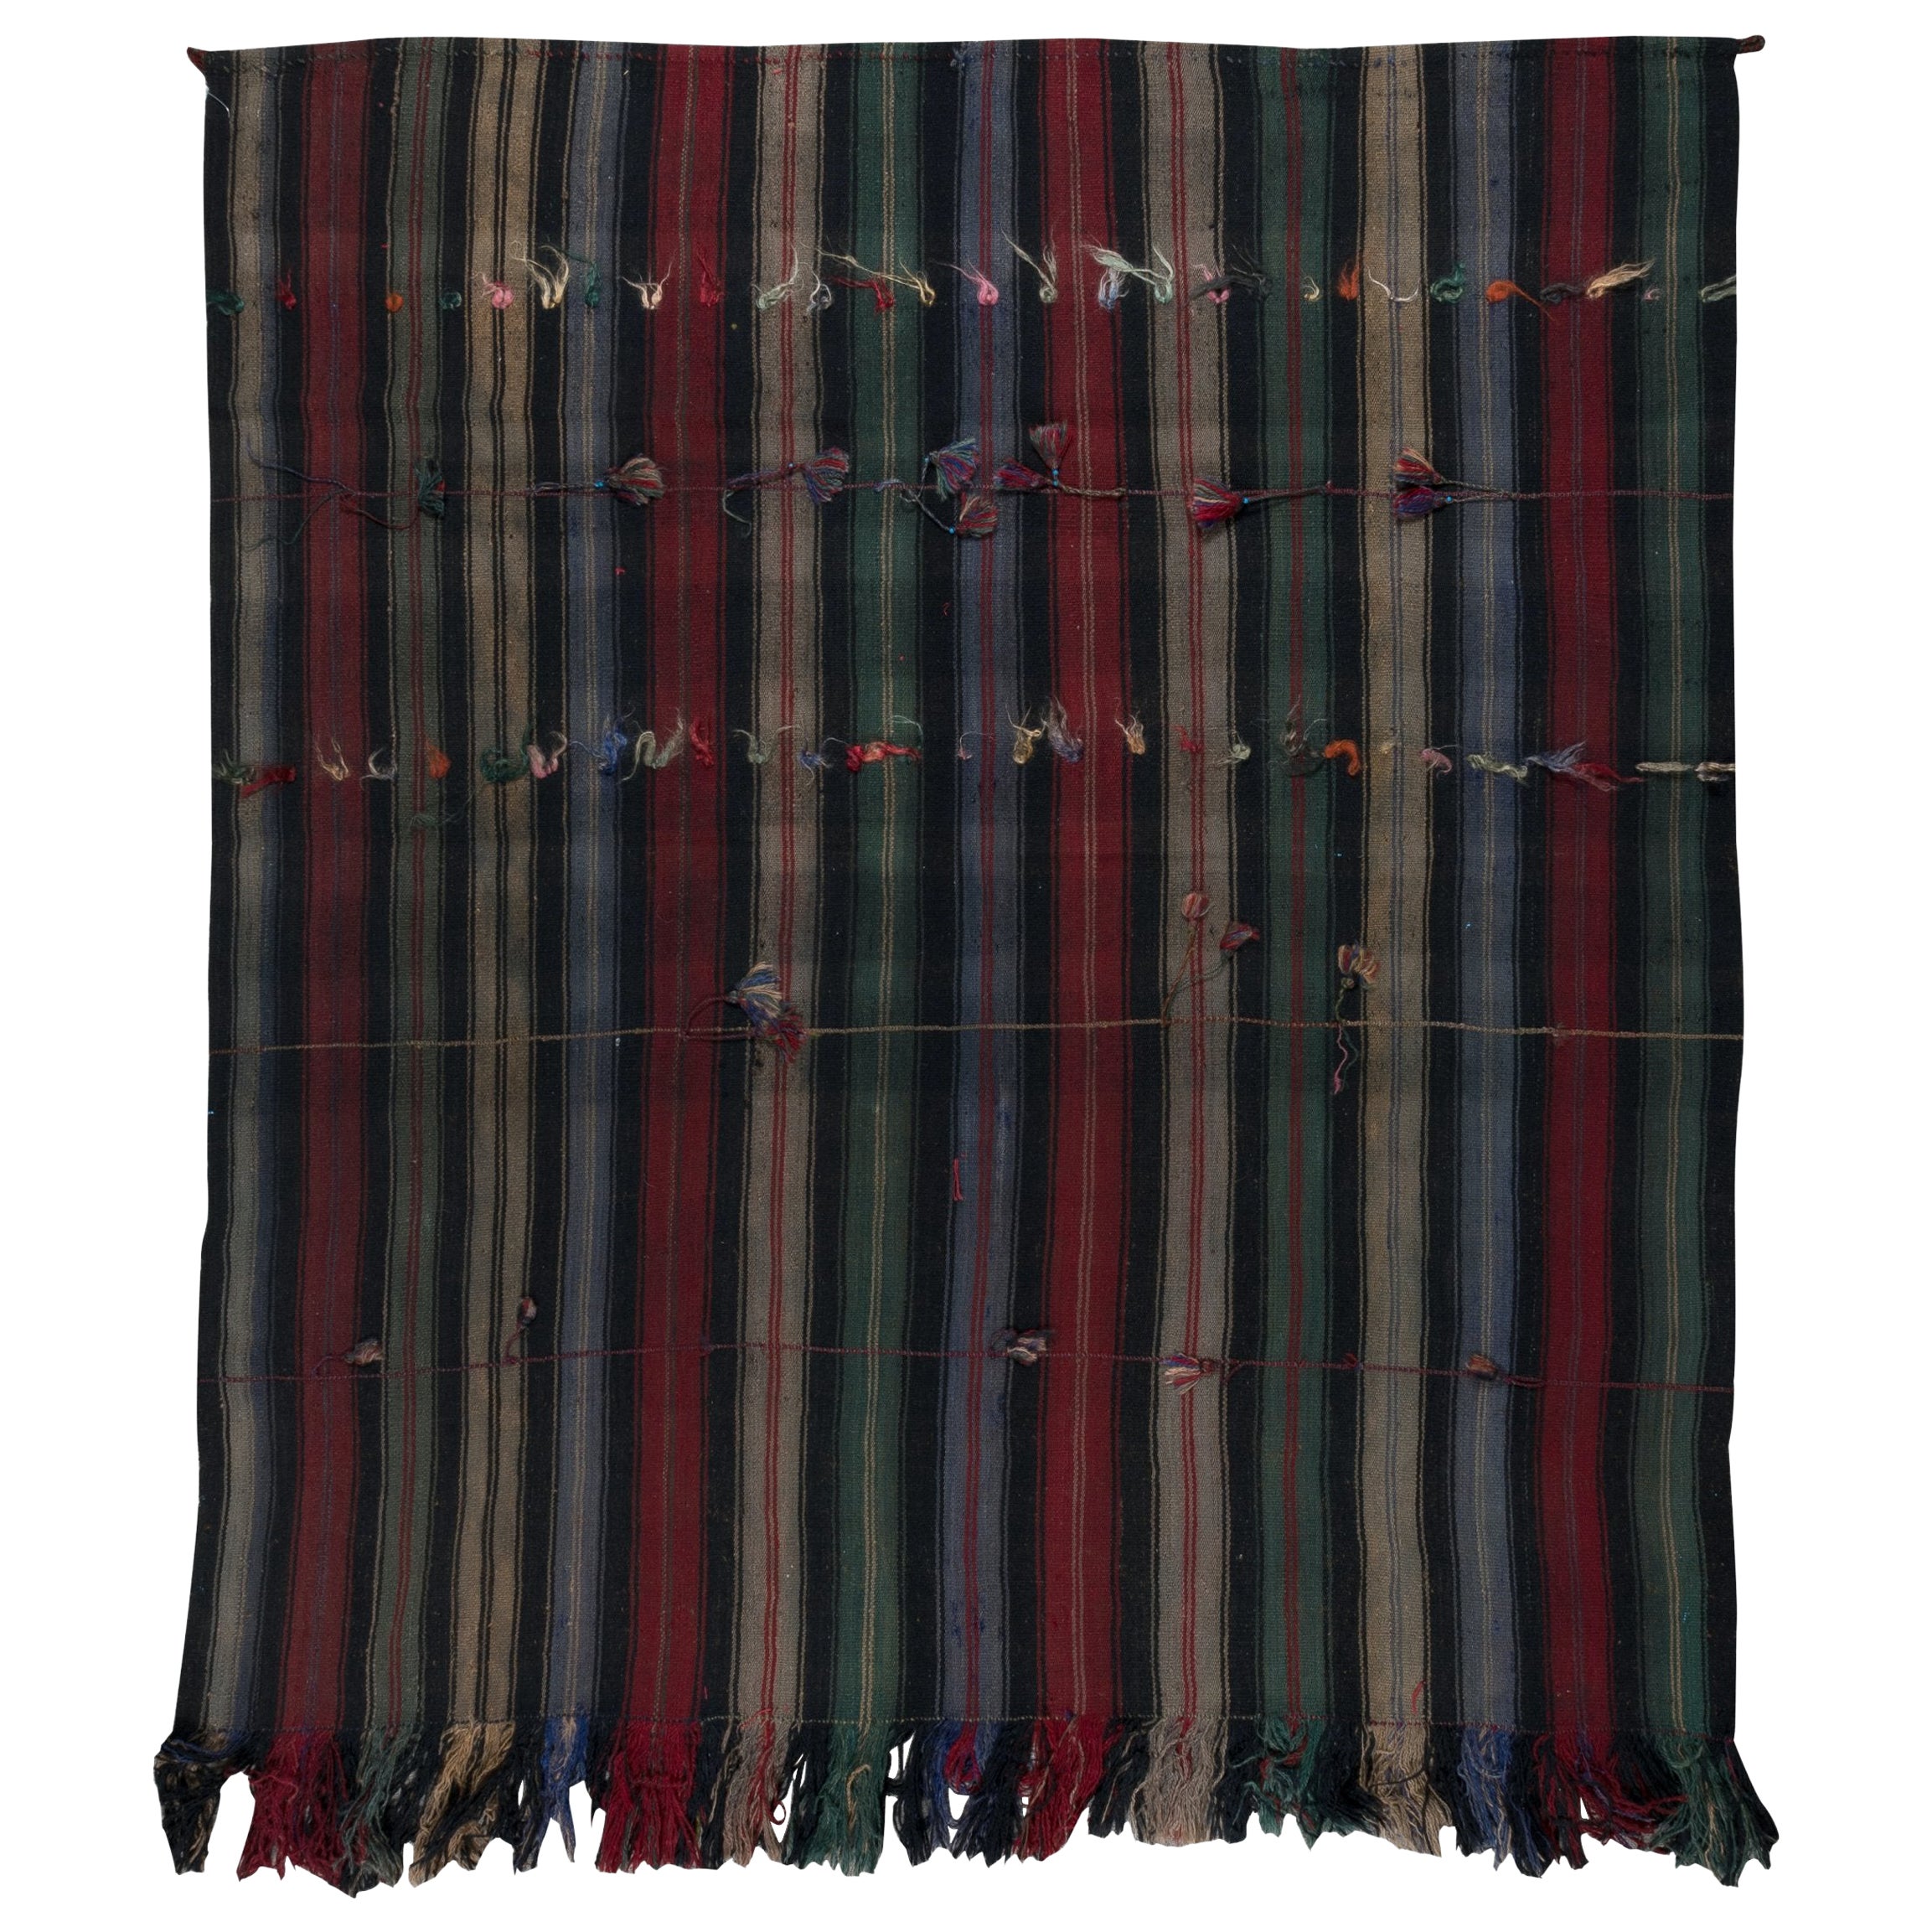 5.6x6.2 Ft Hand-Woven Striped Kilim, Vintage Flat-Weave Anatolian Rug